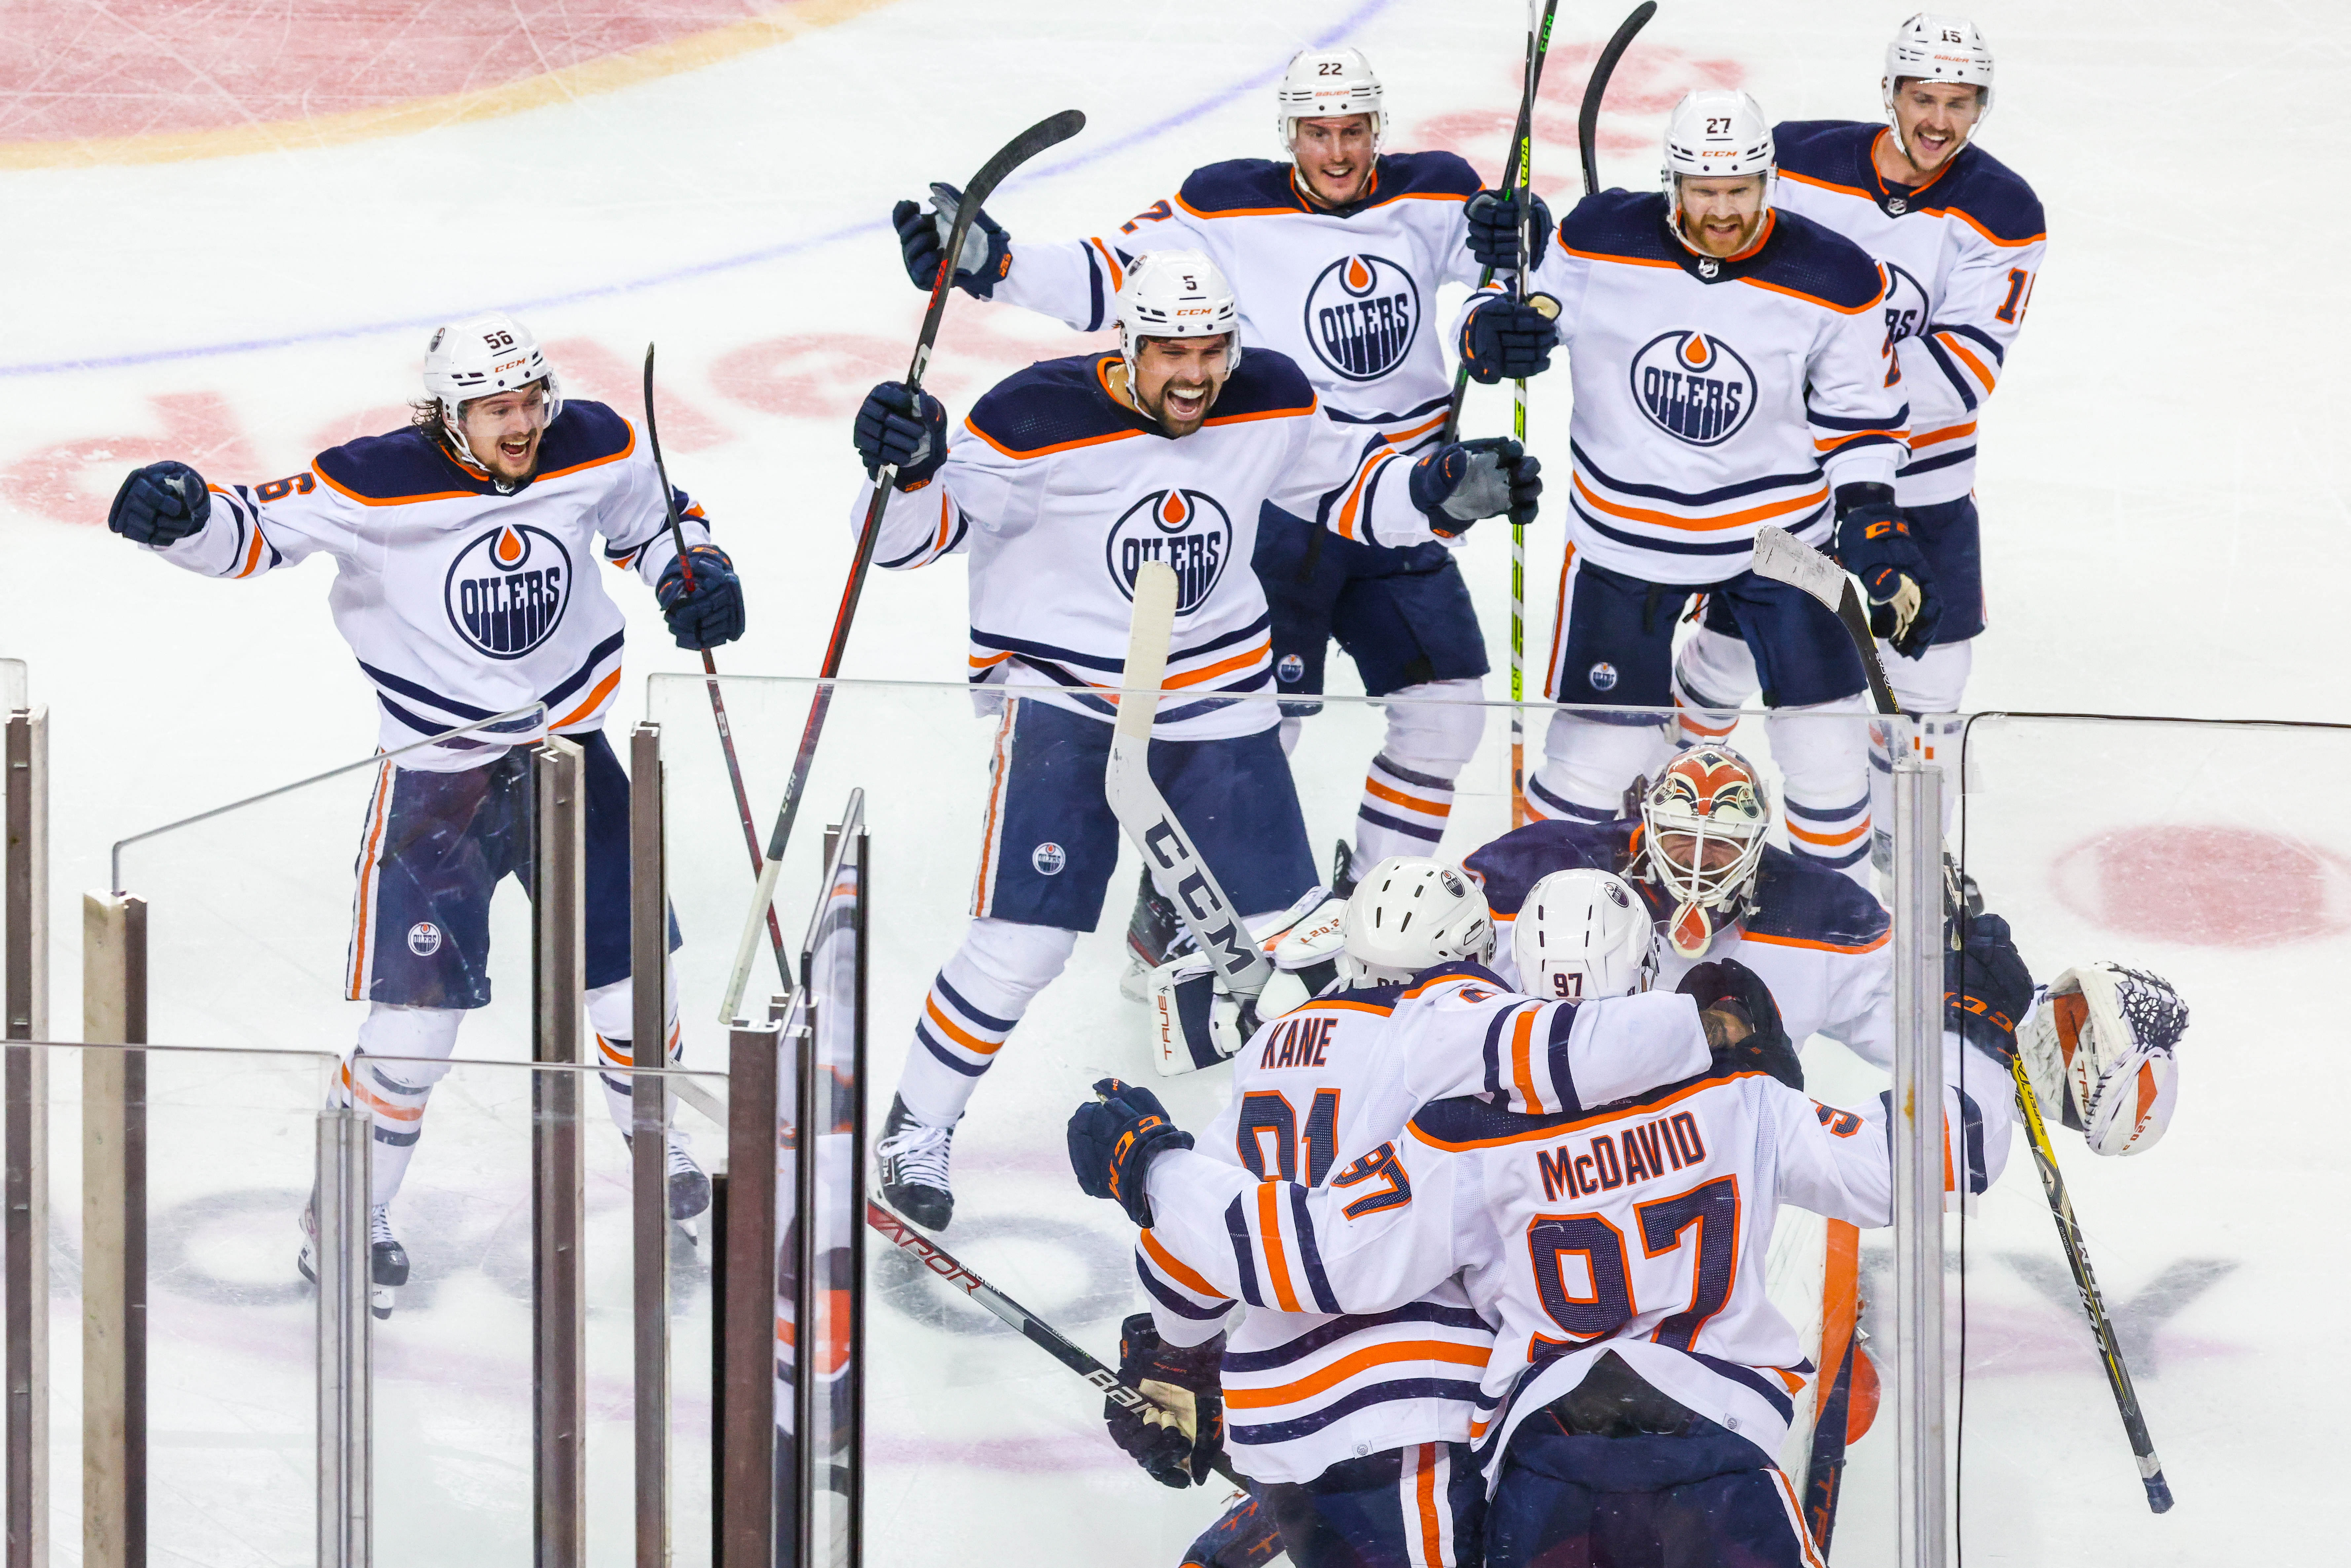 Battle of Alberta over as Edmonton Oilers take 4-1 series victory over Calgary Flames